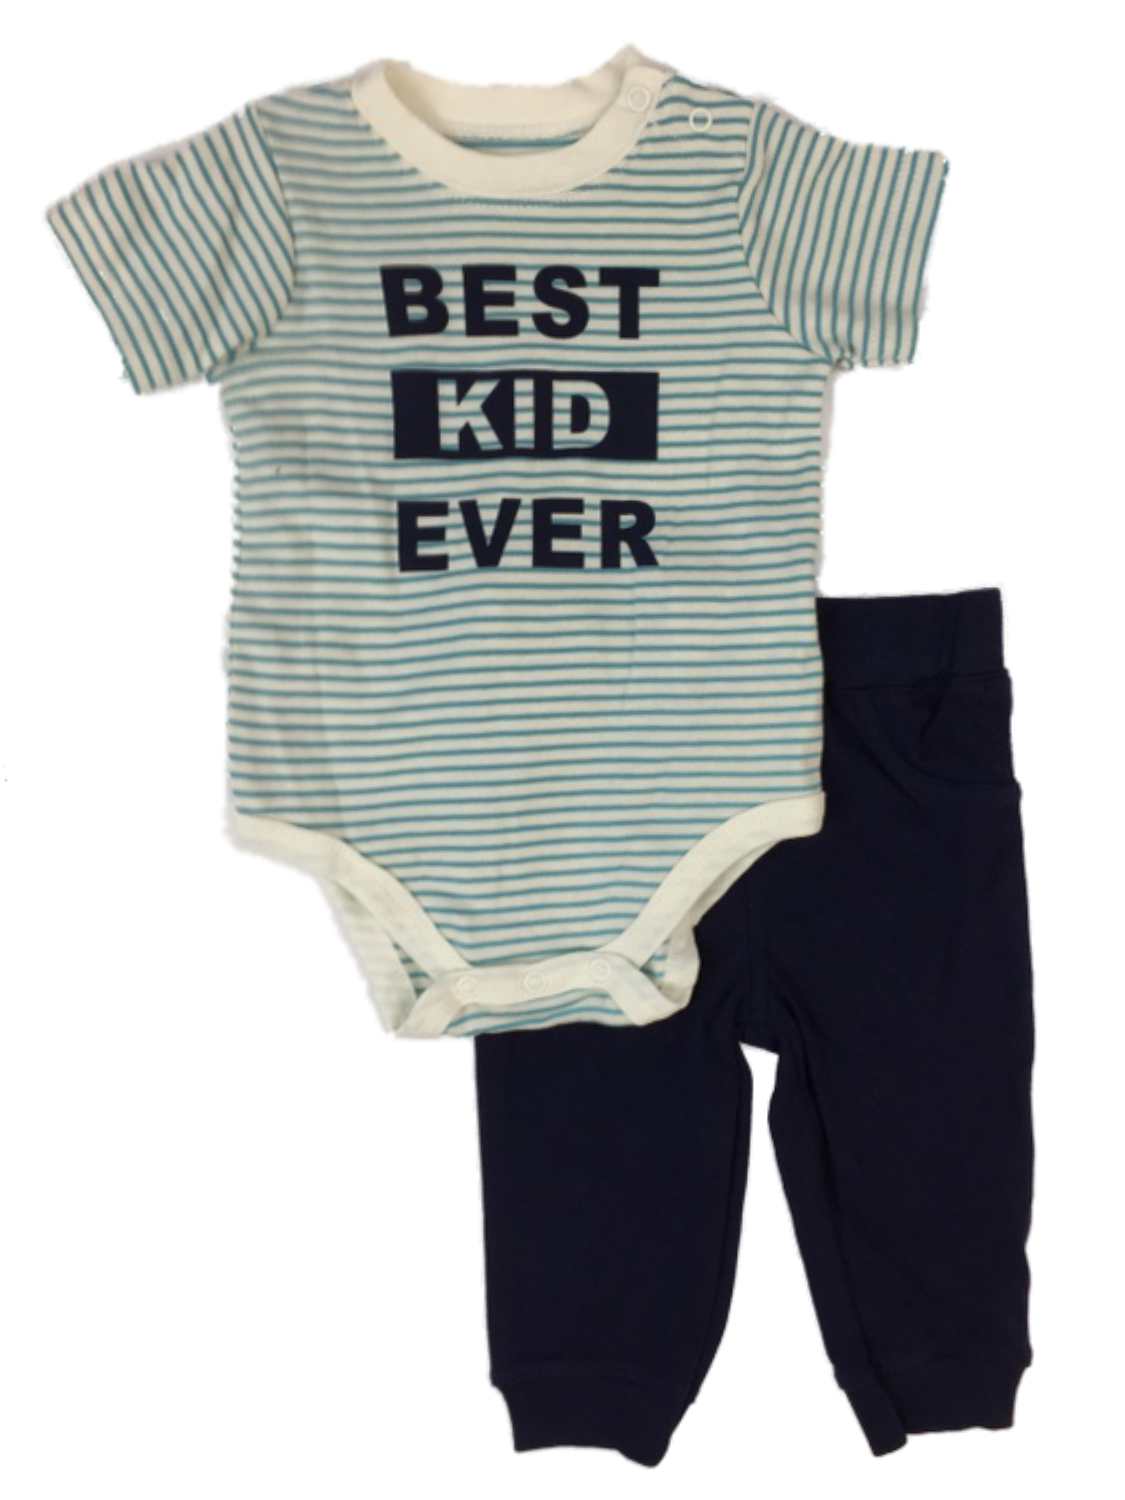 Little Wonders Infant Boys Best Kid Ever Baby Outfit Blue Stripe Bodysuit & Pants Set